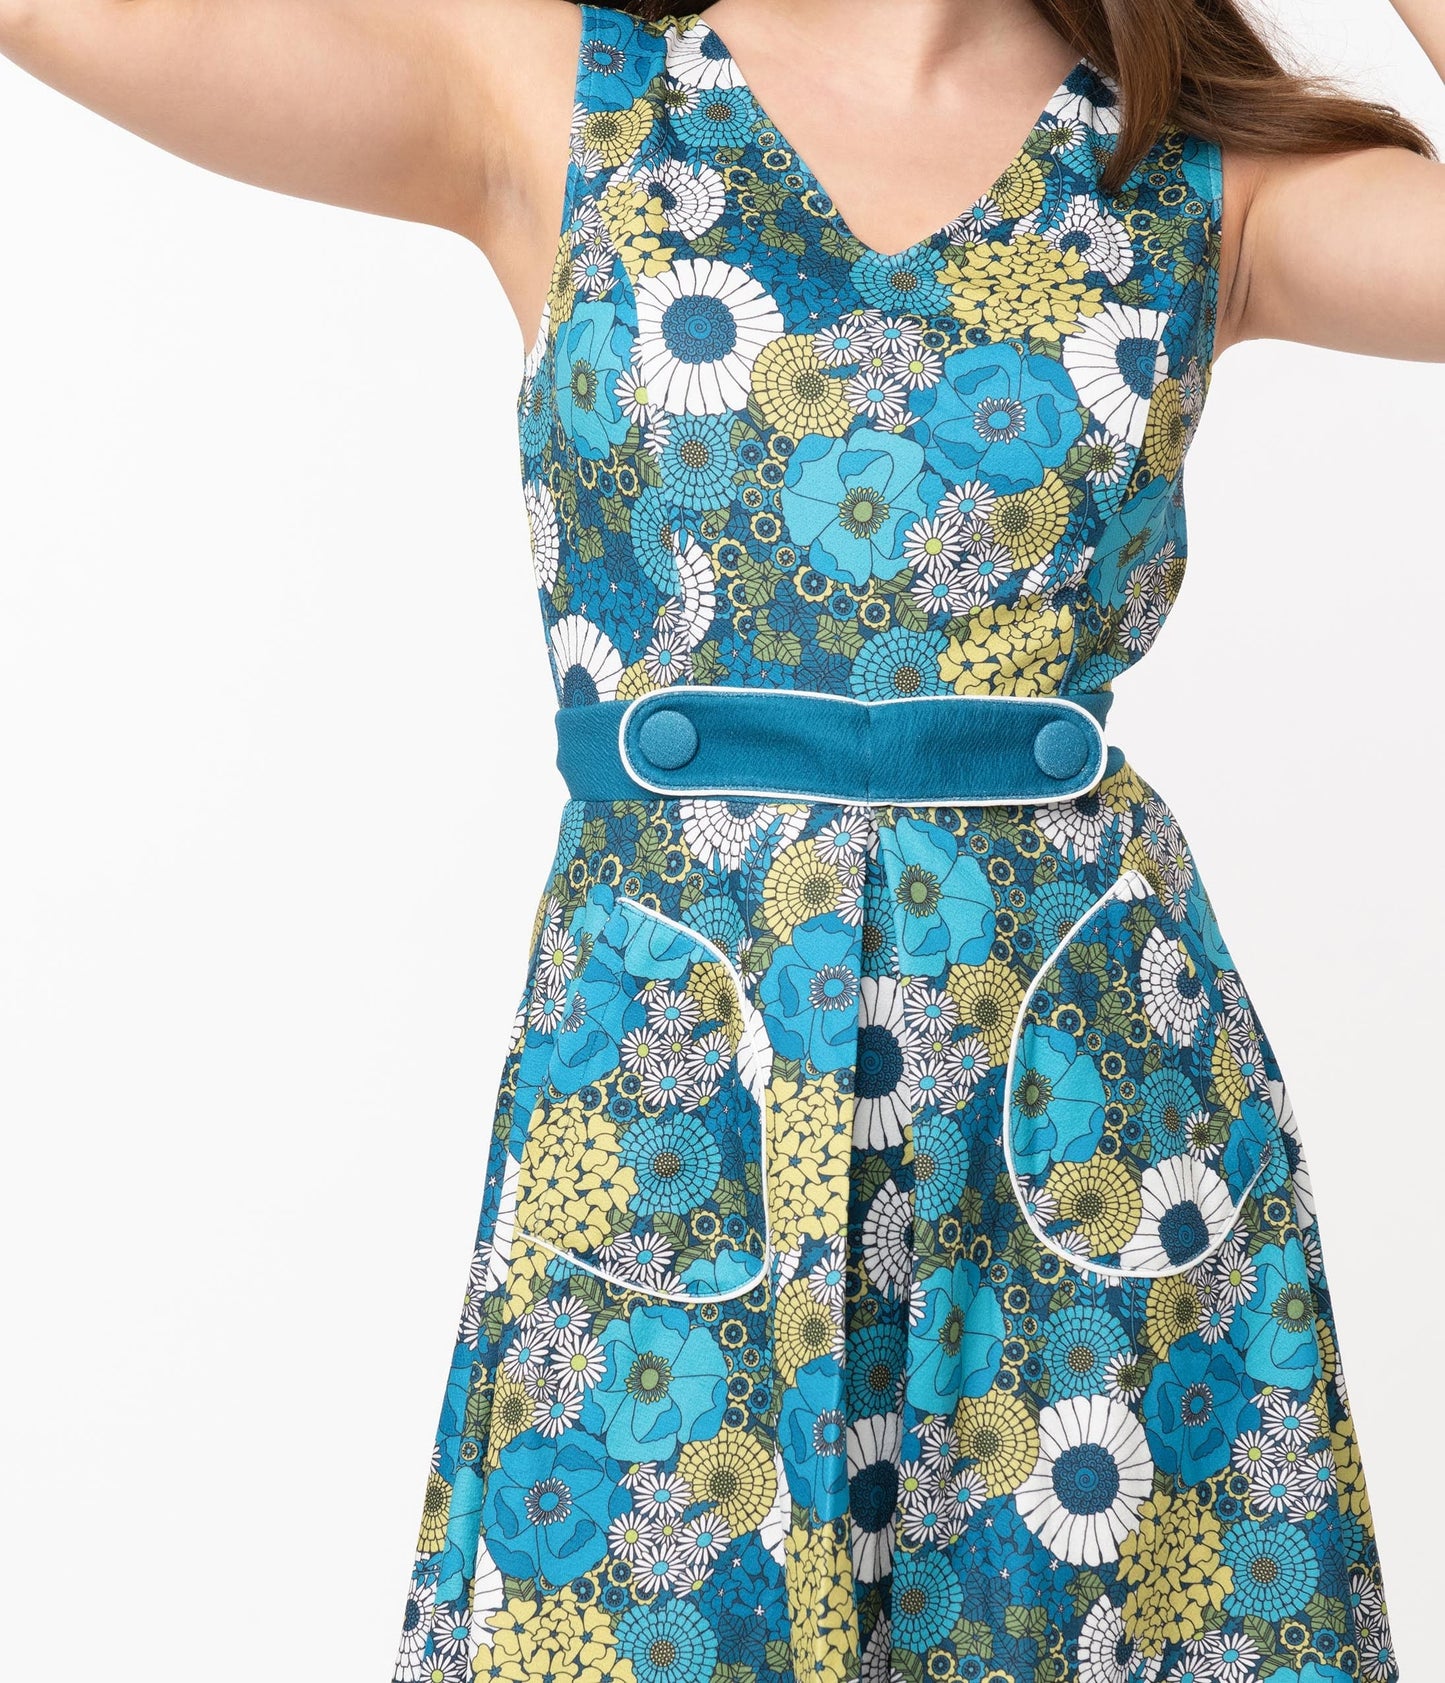 Smak Parlour Teal & Aqua Mod Floral Totally Radical Fit & Flare Dress